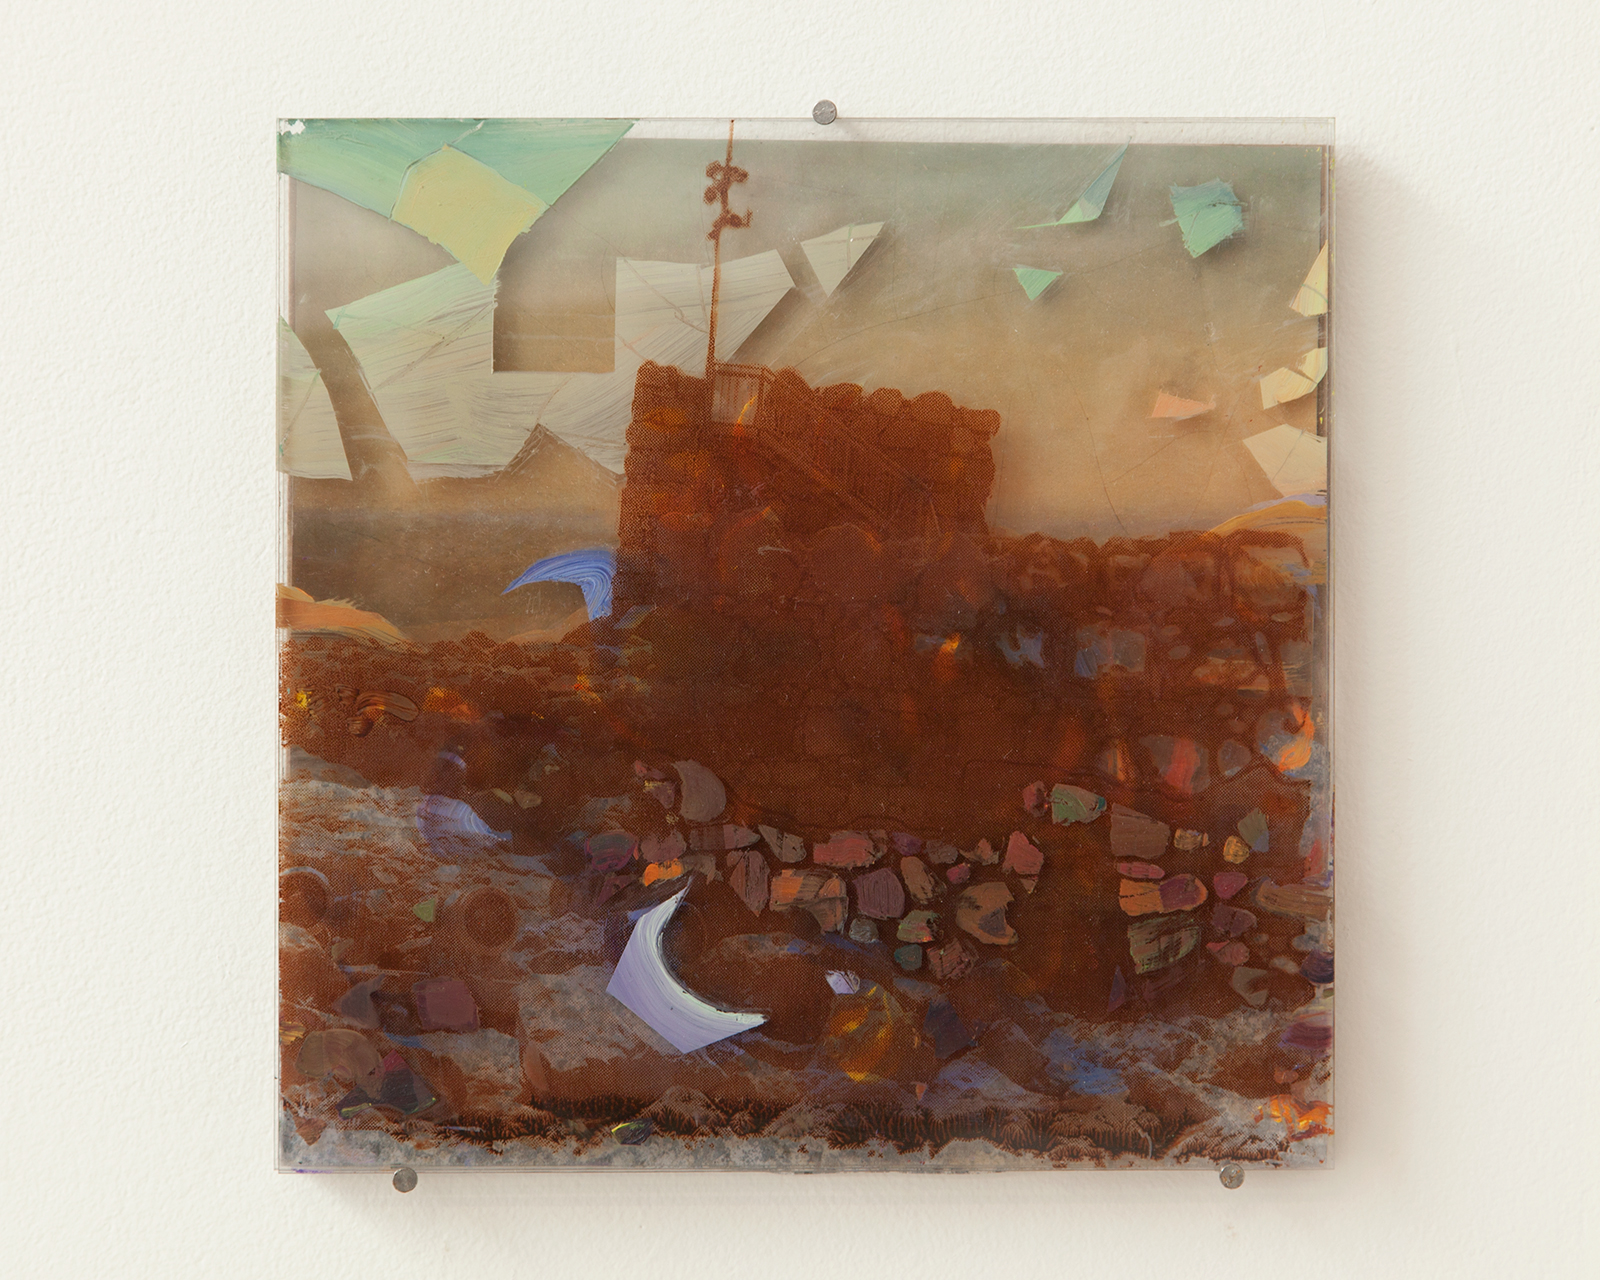  2014, Oil and silkscreen on plexiglass, photo, found material,&nbsp;10 x 10 inches 